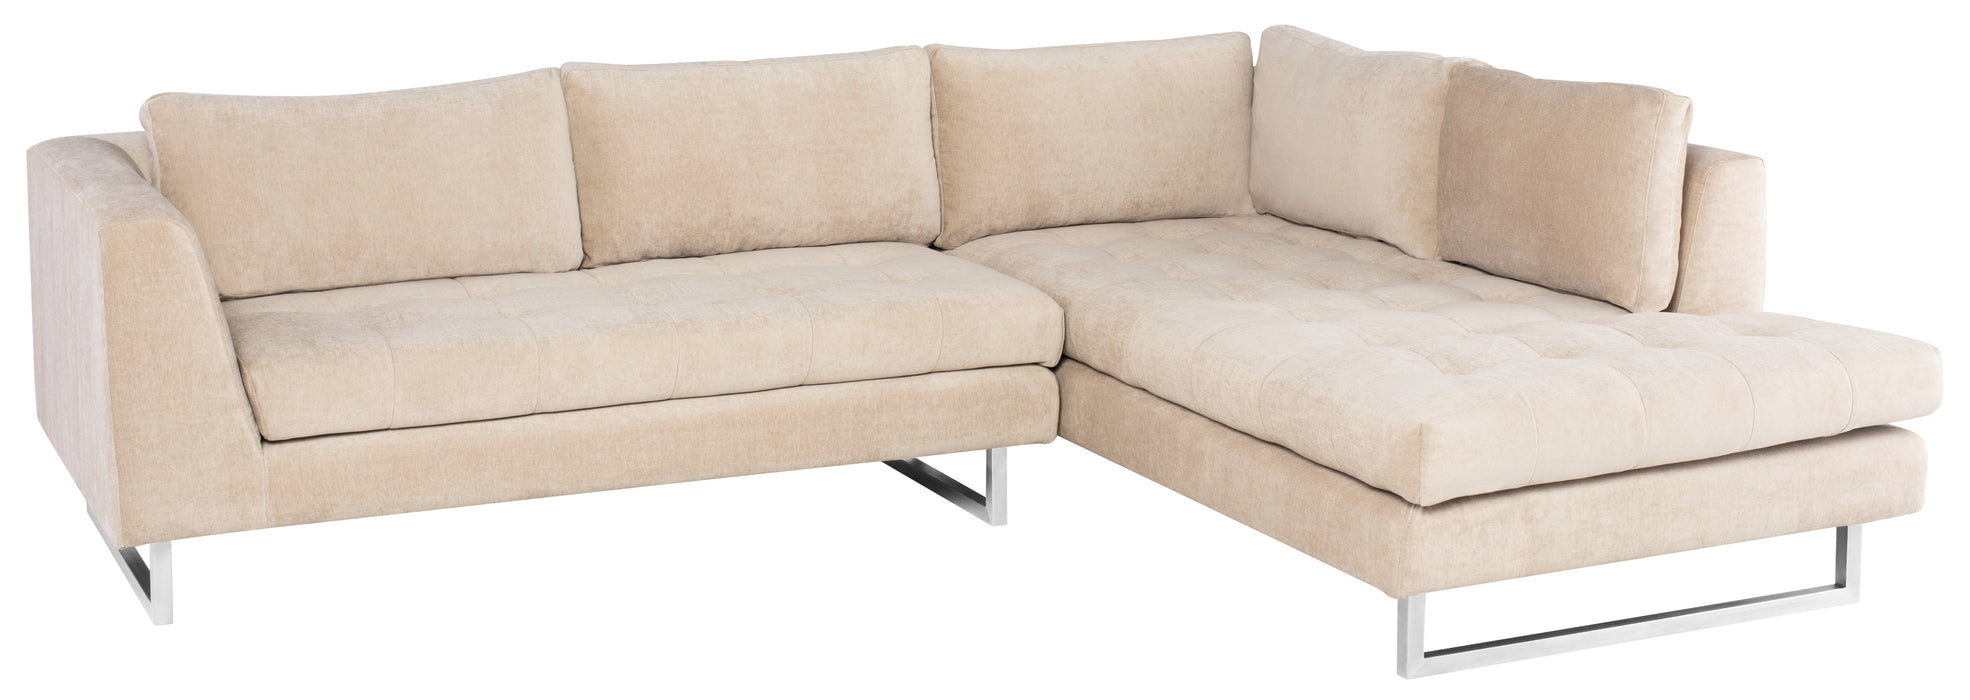 Janis NL Almond Sectional Sofa